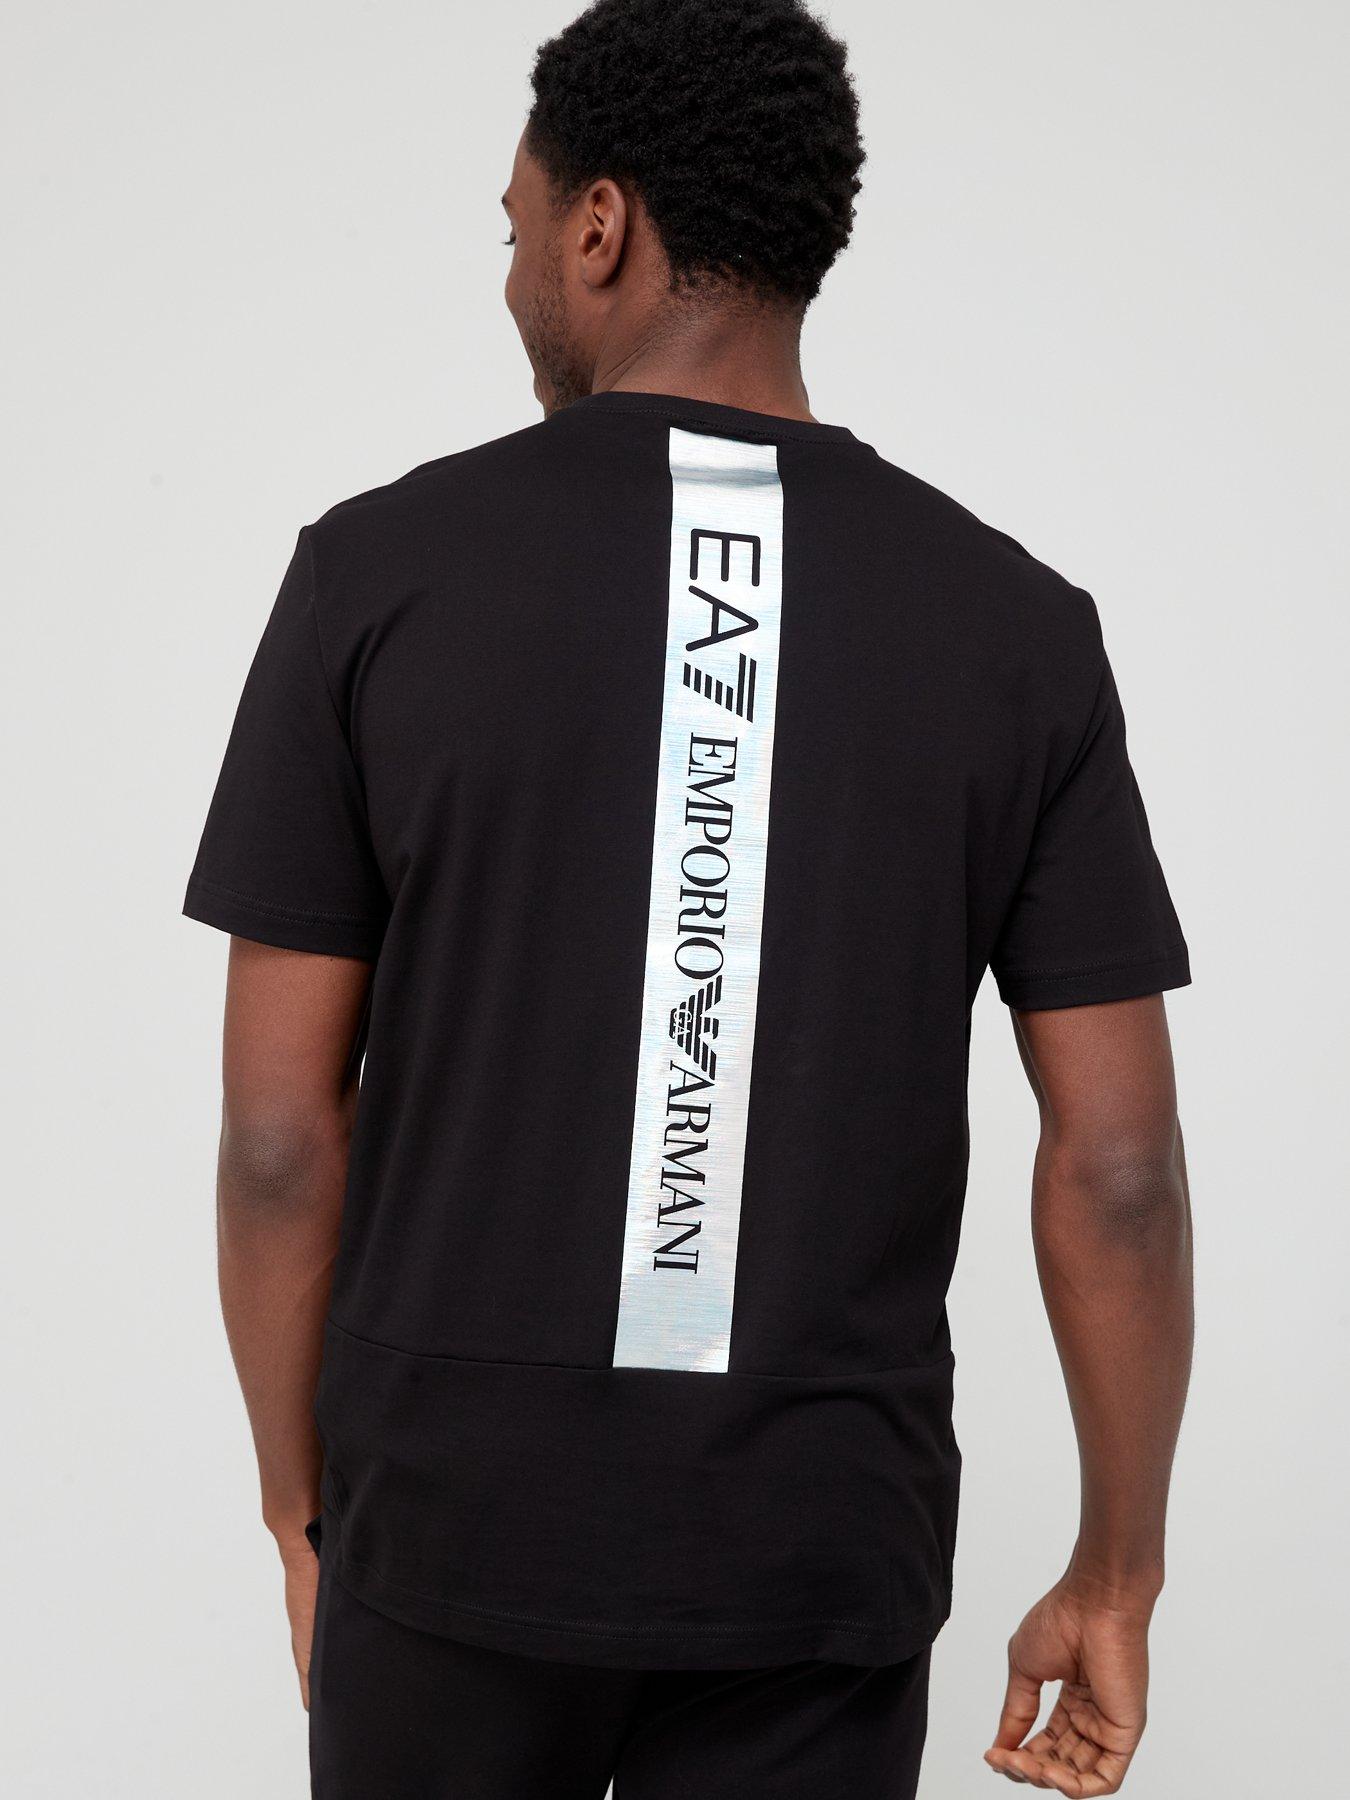 Parasit Melankoli Rundt og rundt EA7 Emporio Armani Extended Logo T-Shirt With Back Print - Black | very.co. uk